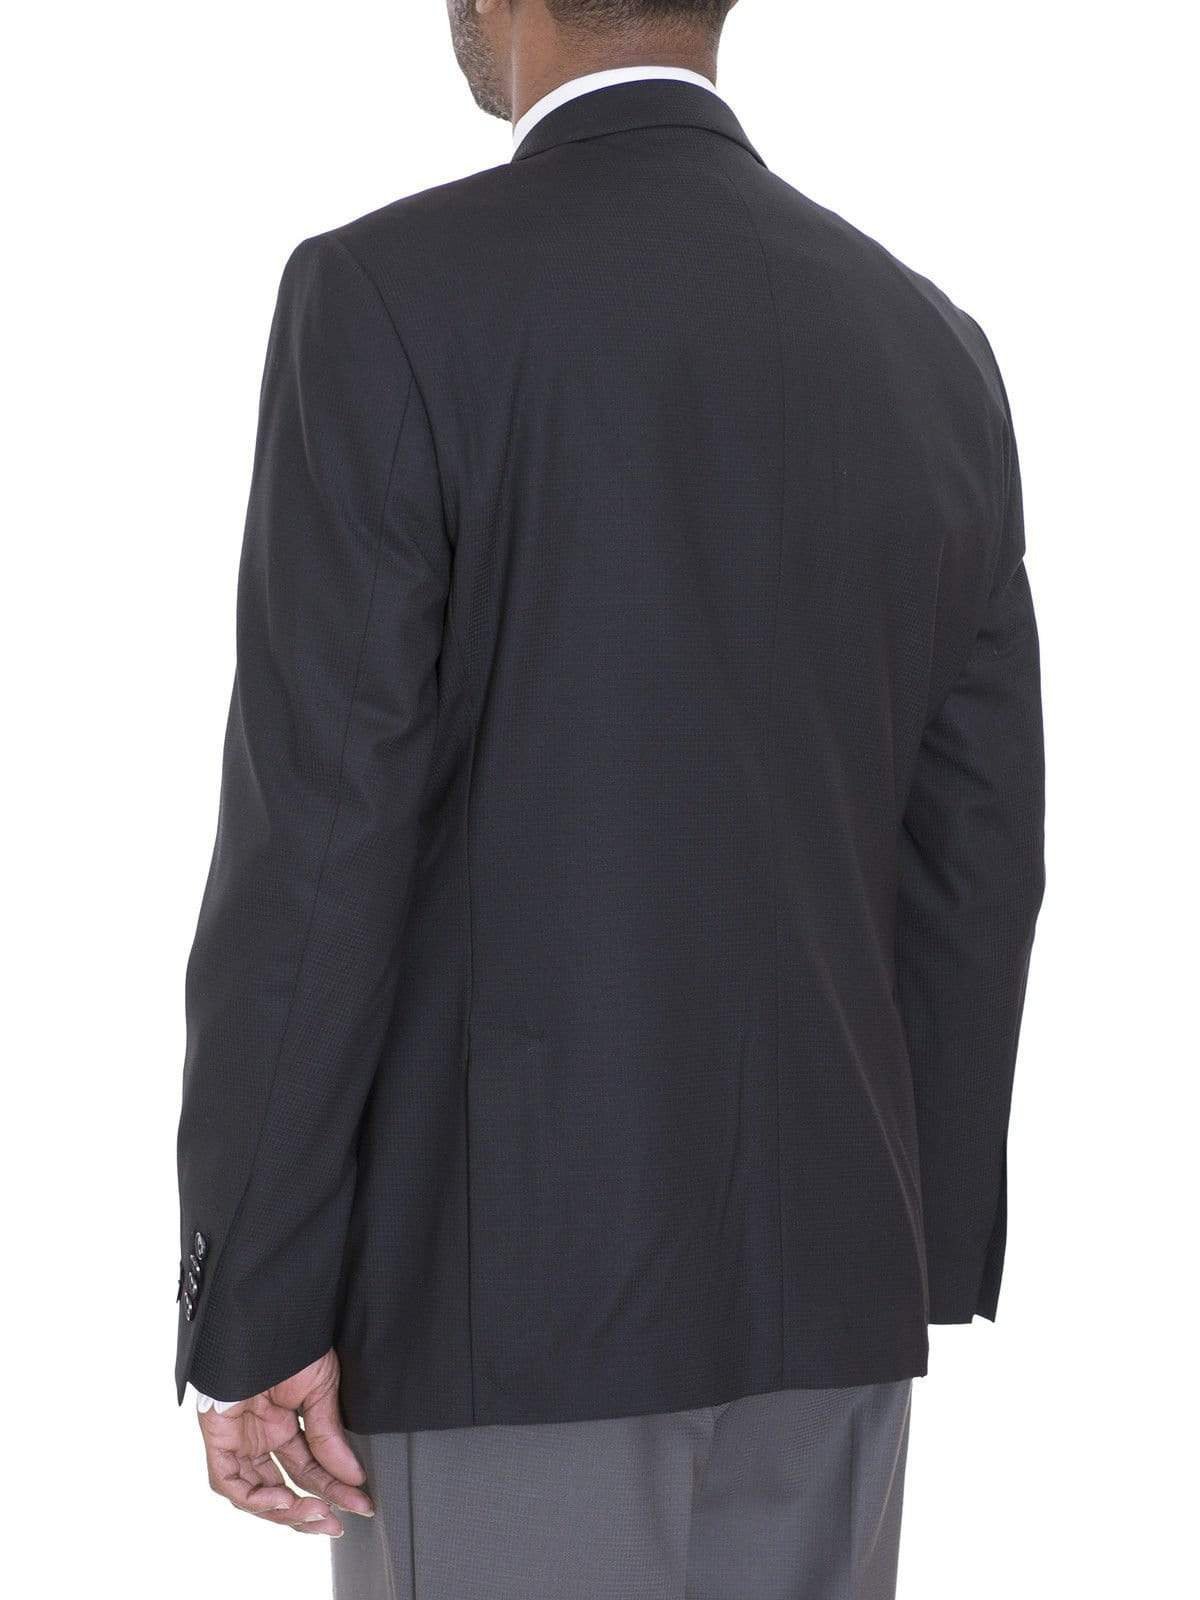 Ideal BLAZERS Ideal Slim Fit Black Textured Half Lined Stretch Wool Blazer Suit Jacket